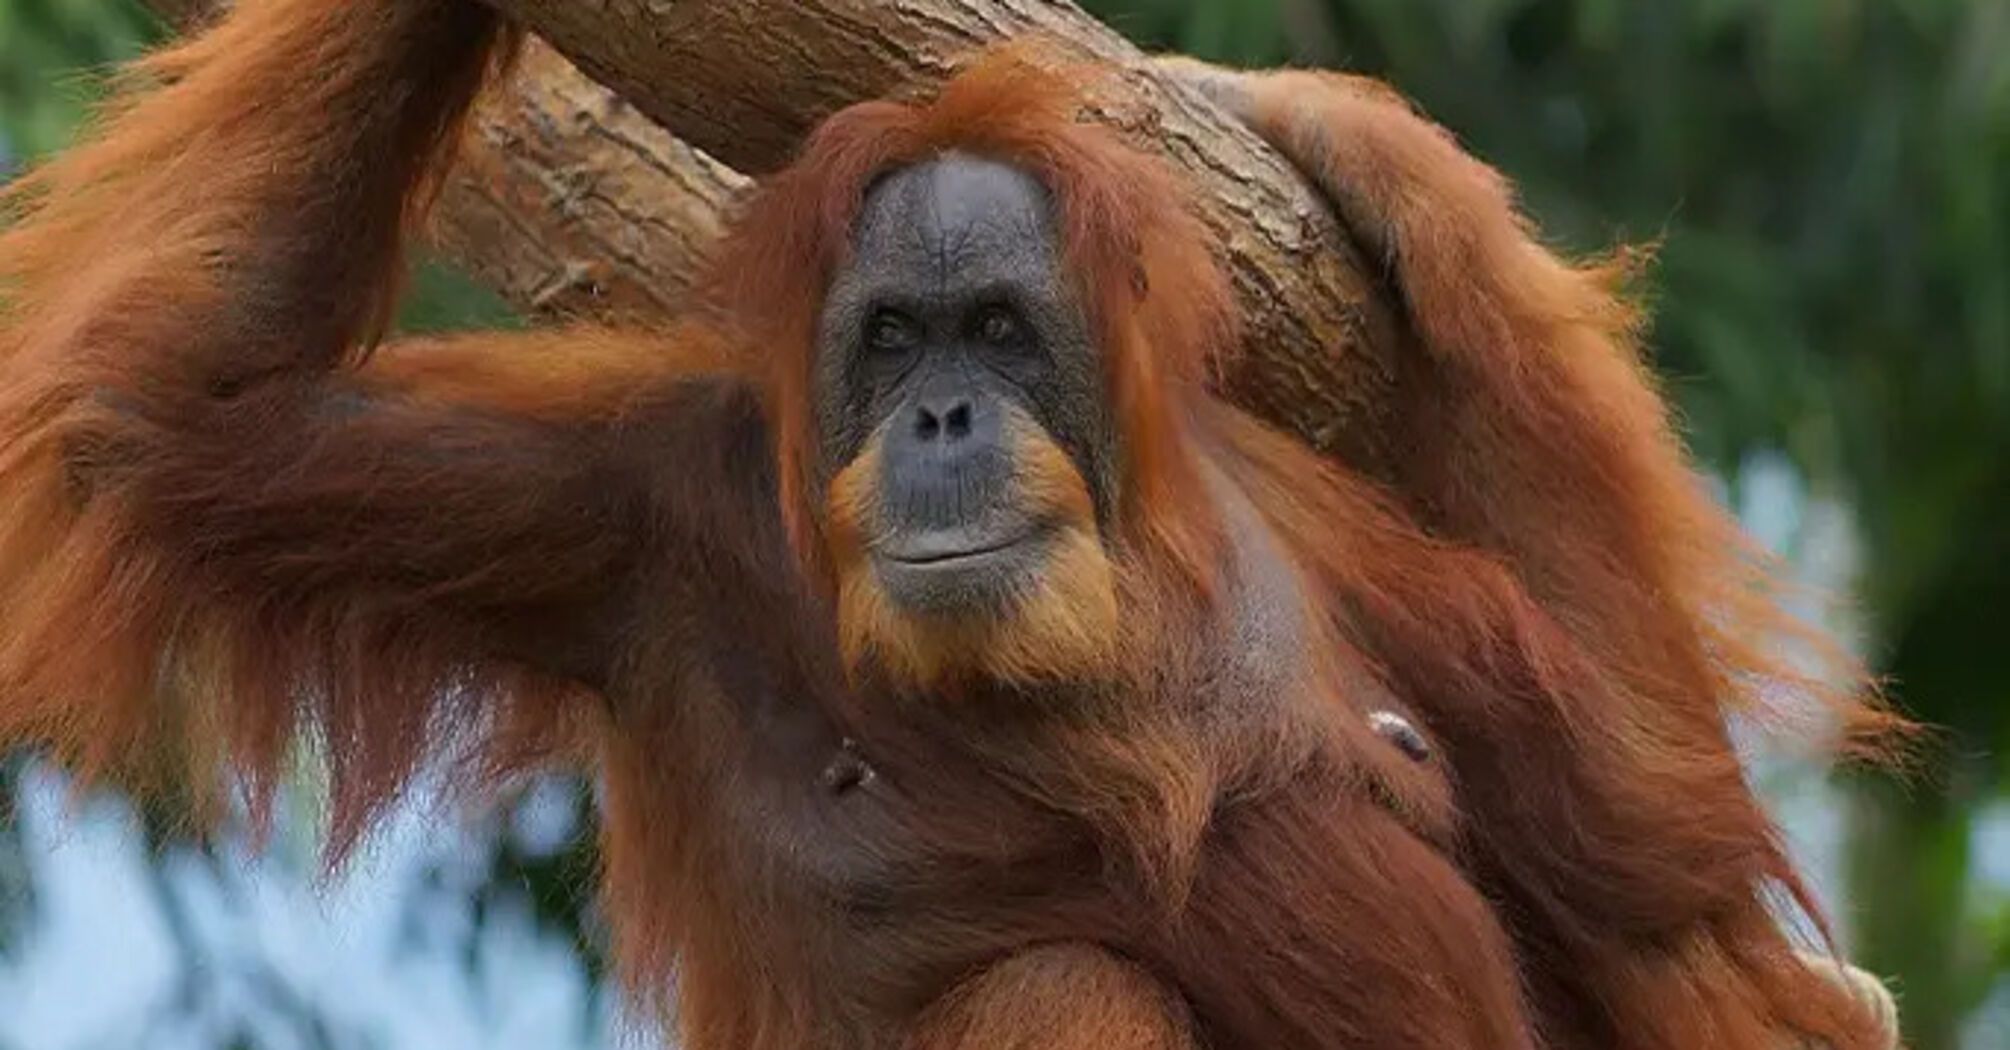 The world's oldest orangutan celebrated its birthday